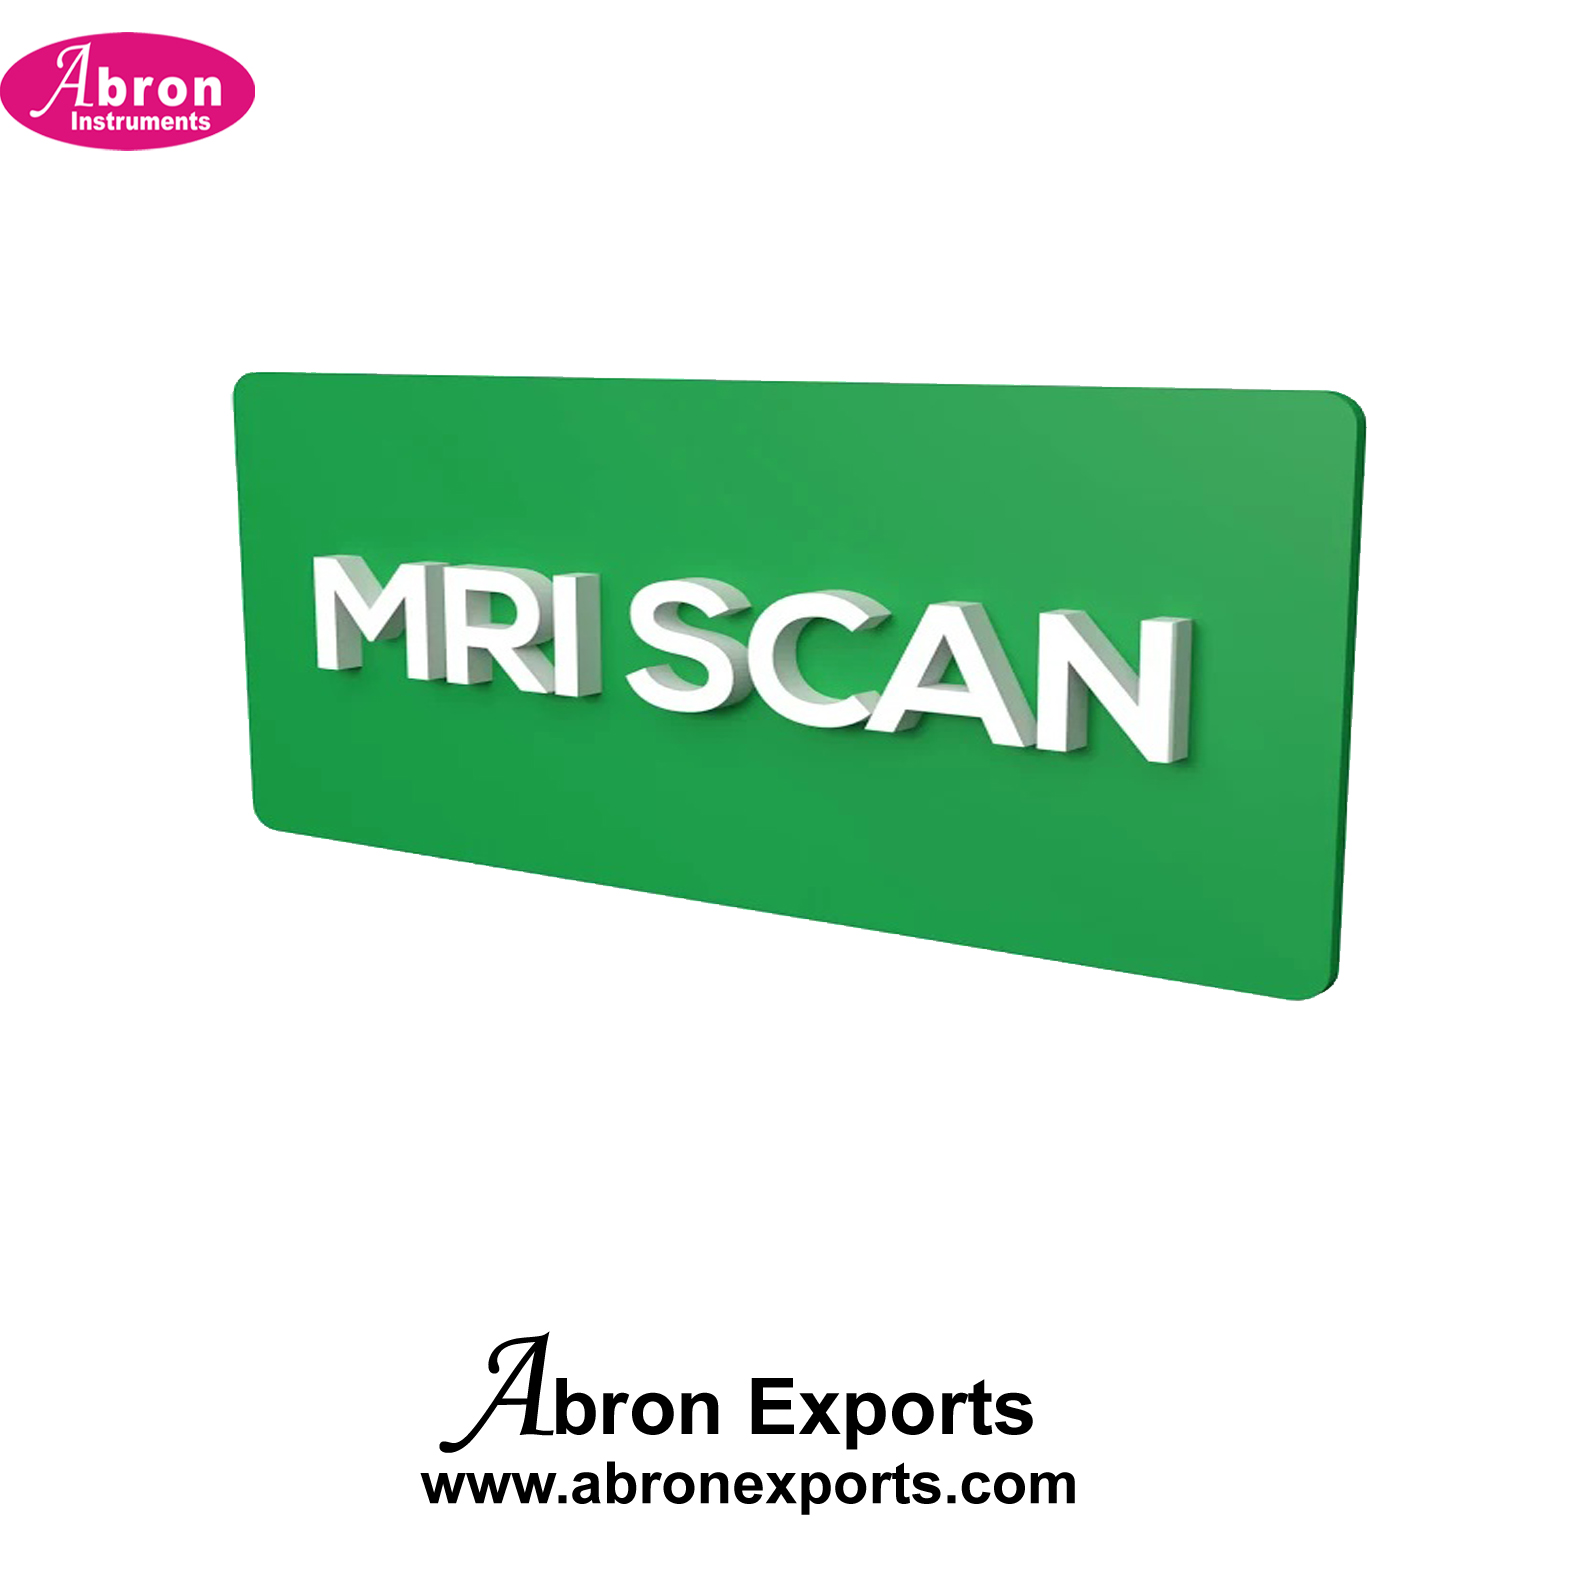 MRI Room Sign Acrylic 12x6Inch Abron ABM-2291LP 